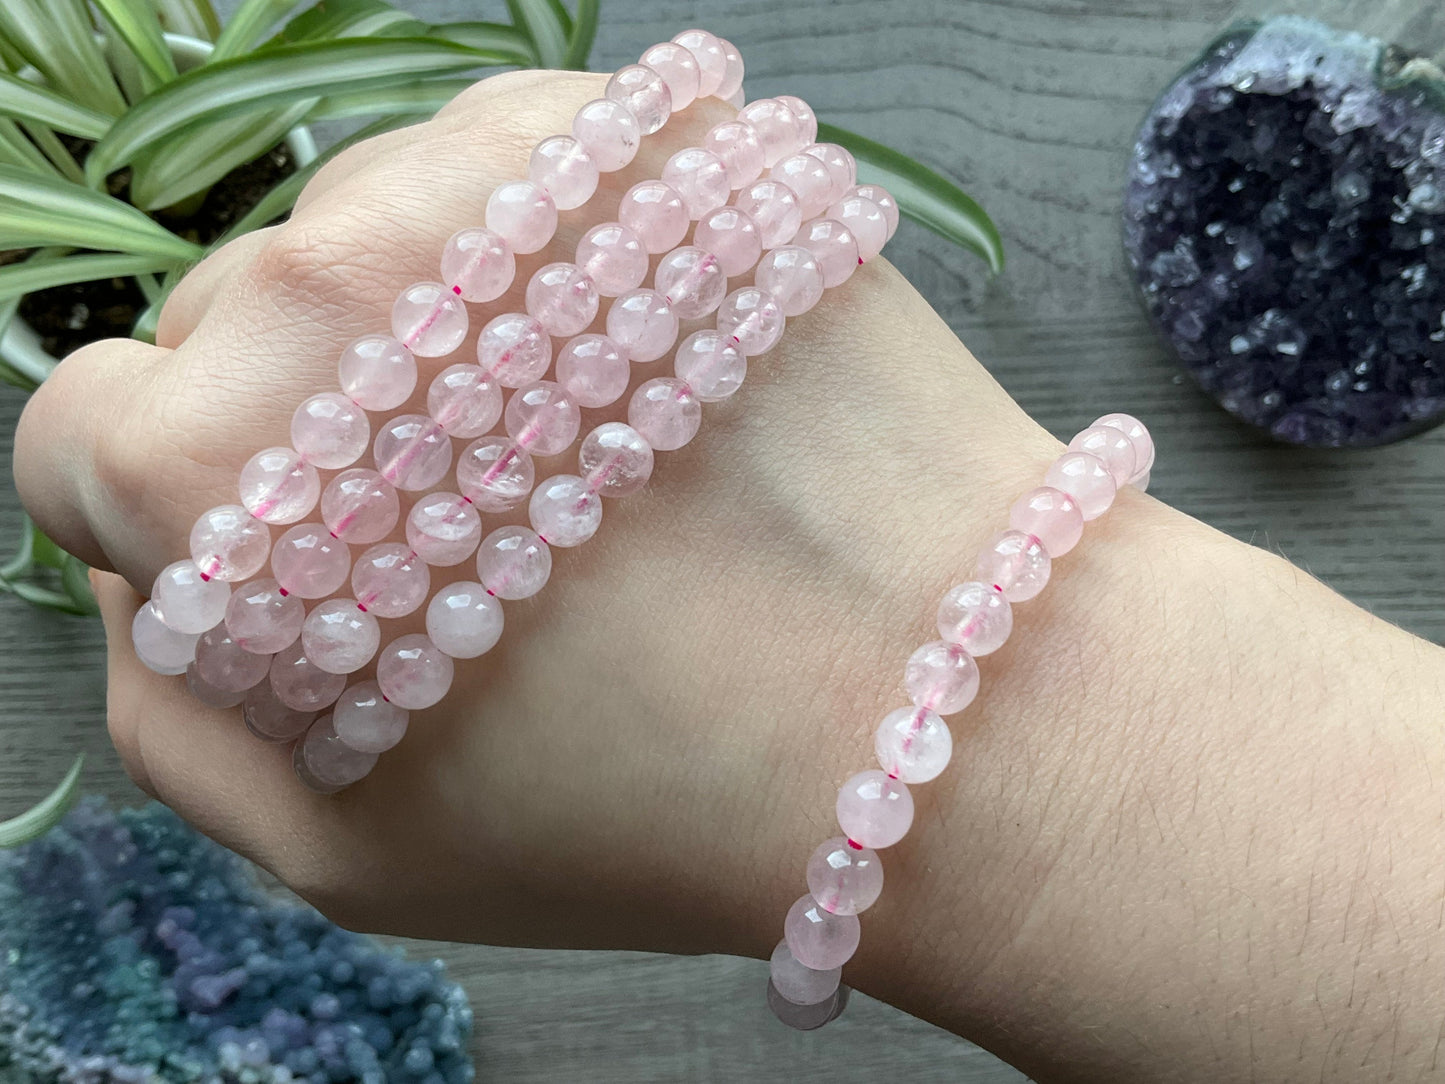 Pictured is a rose quartz bead bracelet.